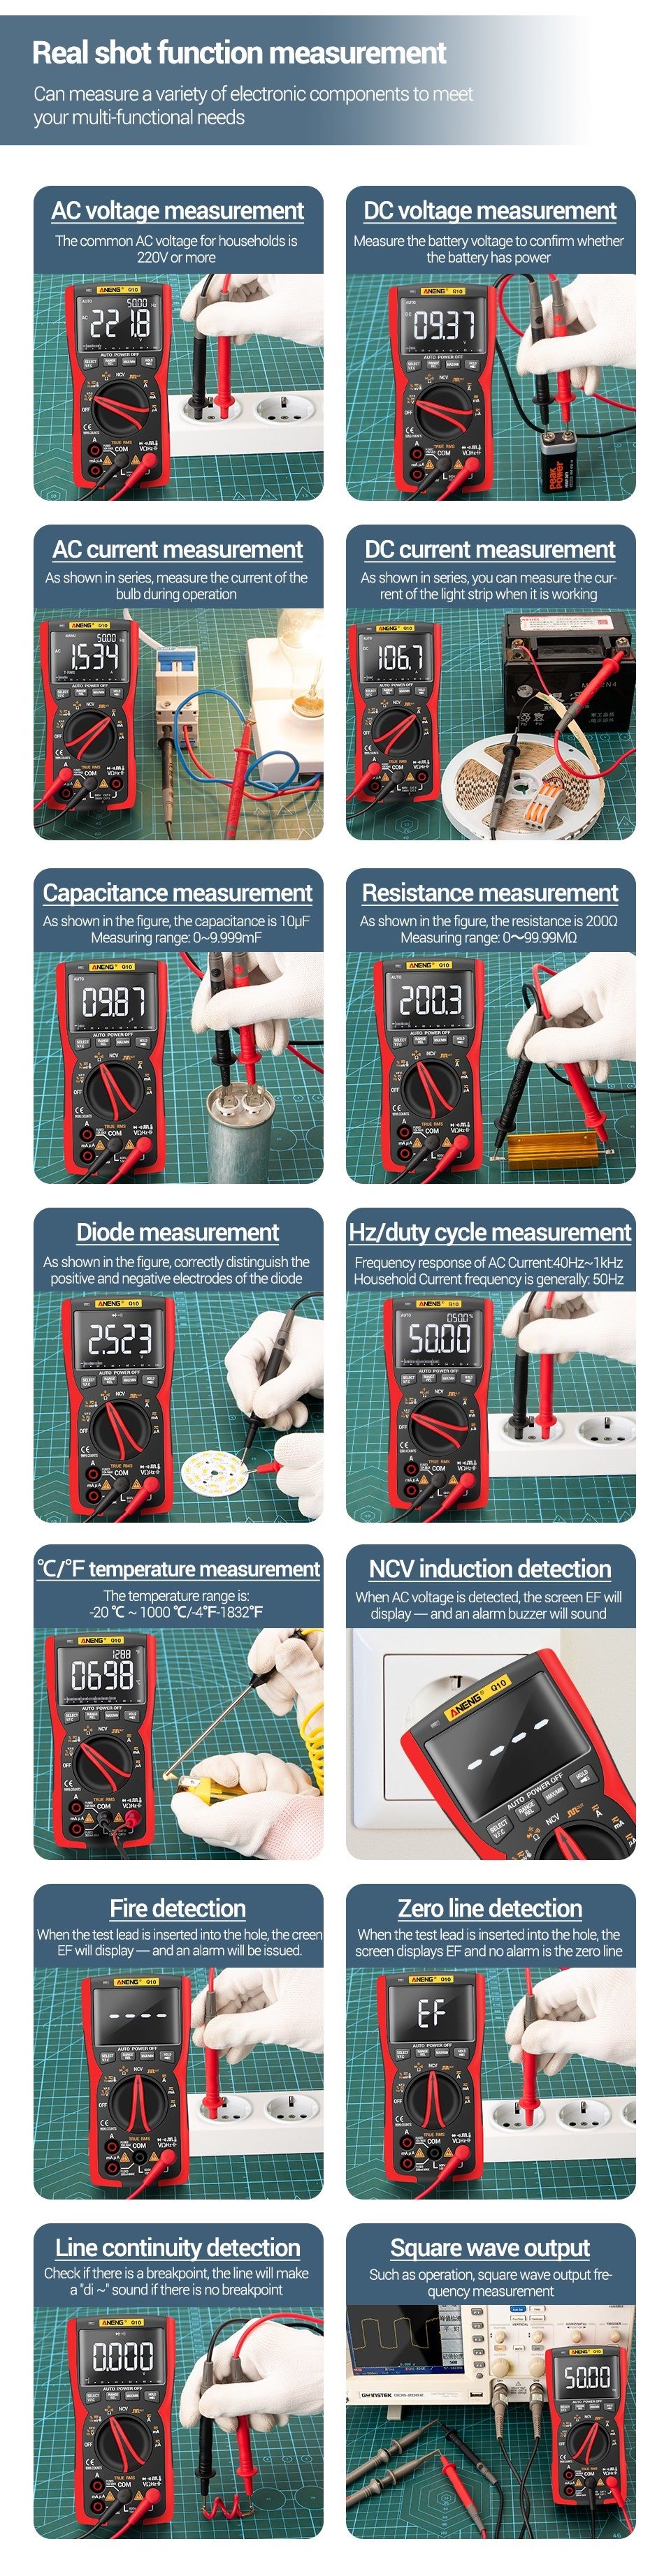 ANENG-Q10-Digital-Multimeter-9999-Professional-Tester-Multimeter-True-RMS-Analog-DIY-Transistor-Capa-1750267